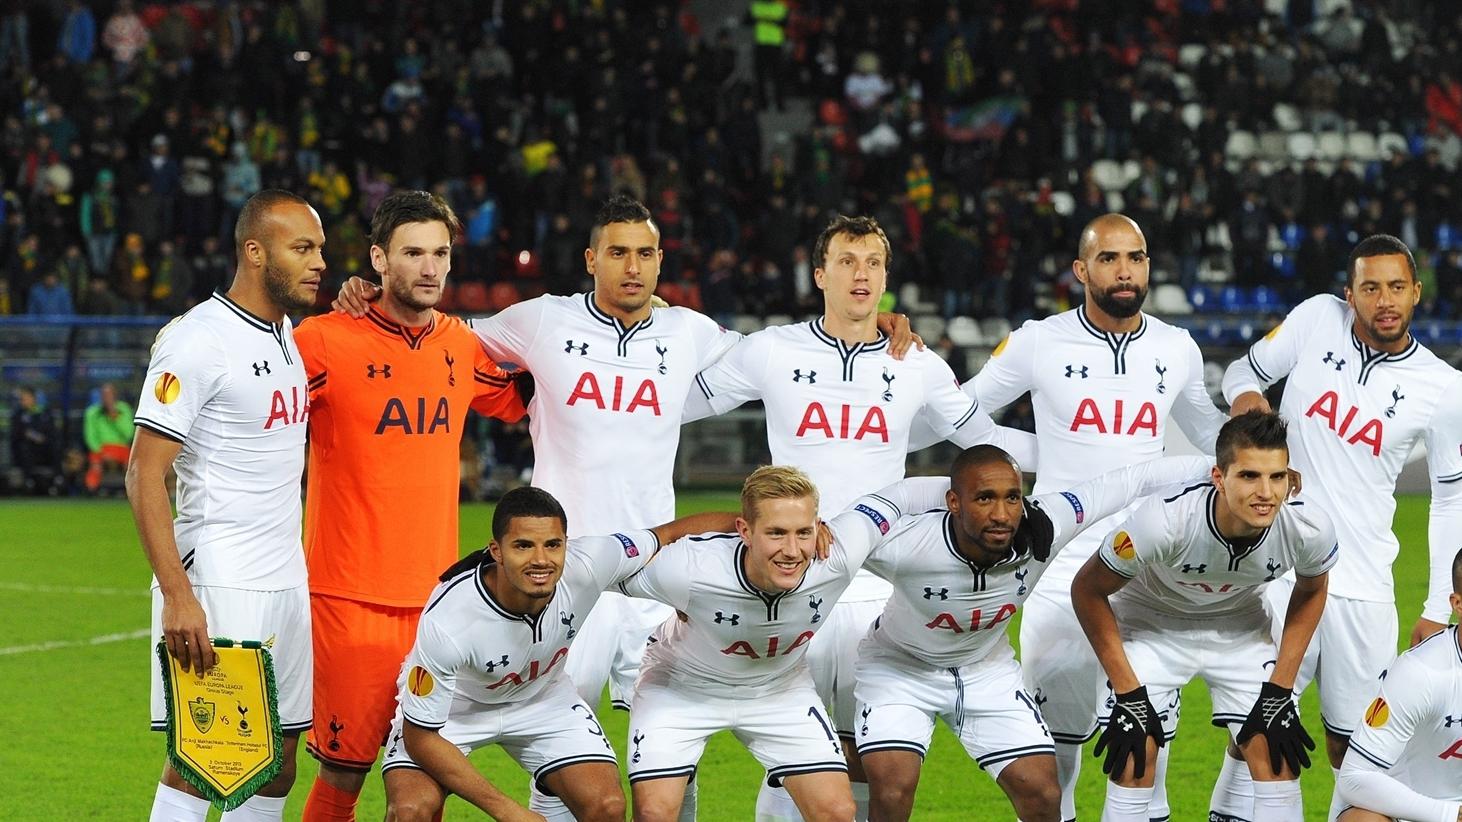 Momentum with Spurs as Sheriff call, UEFA Europa League